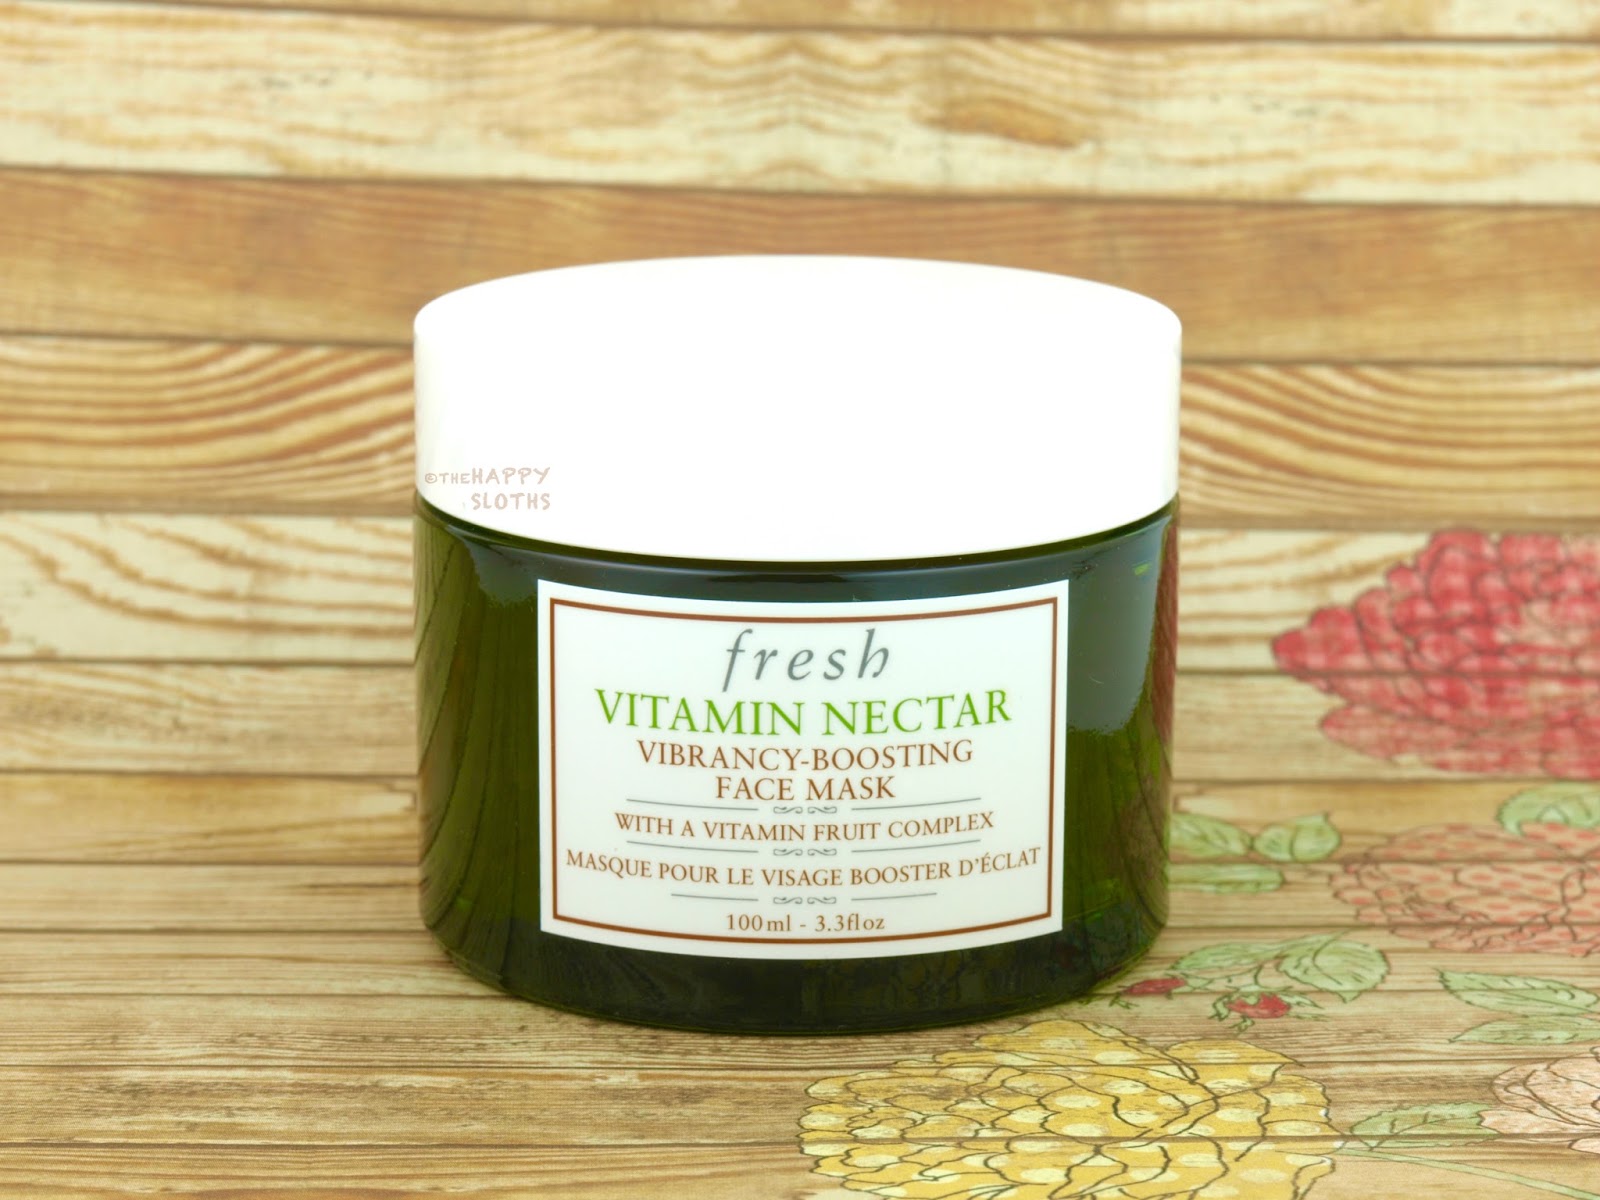 Fresh Vitamin Nectar Vibrancy-Boosting Face Mask: Review